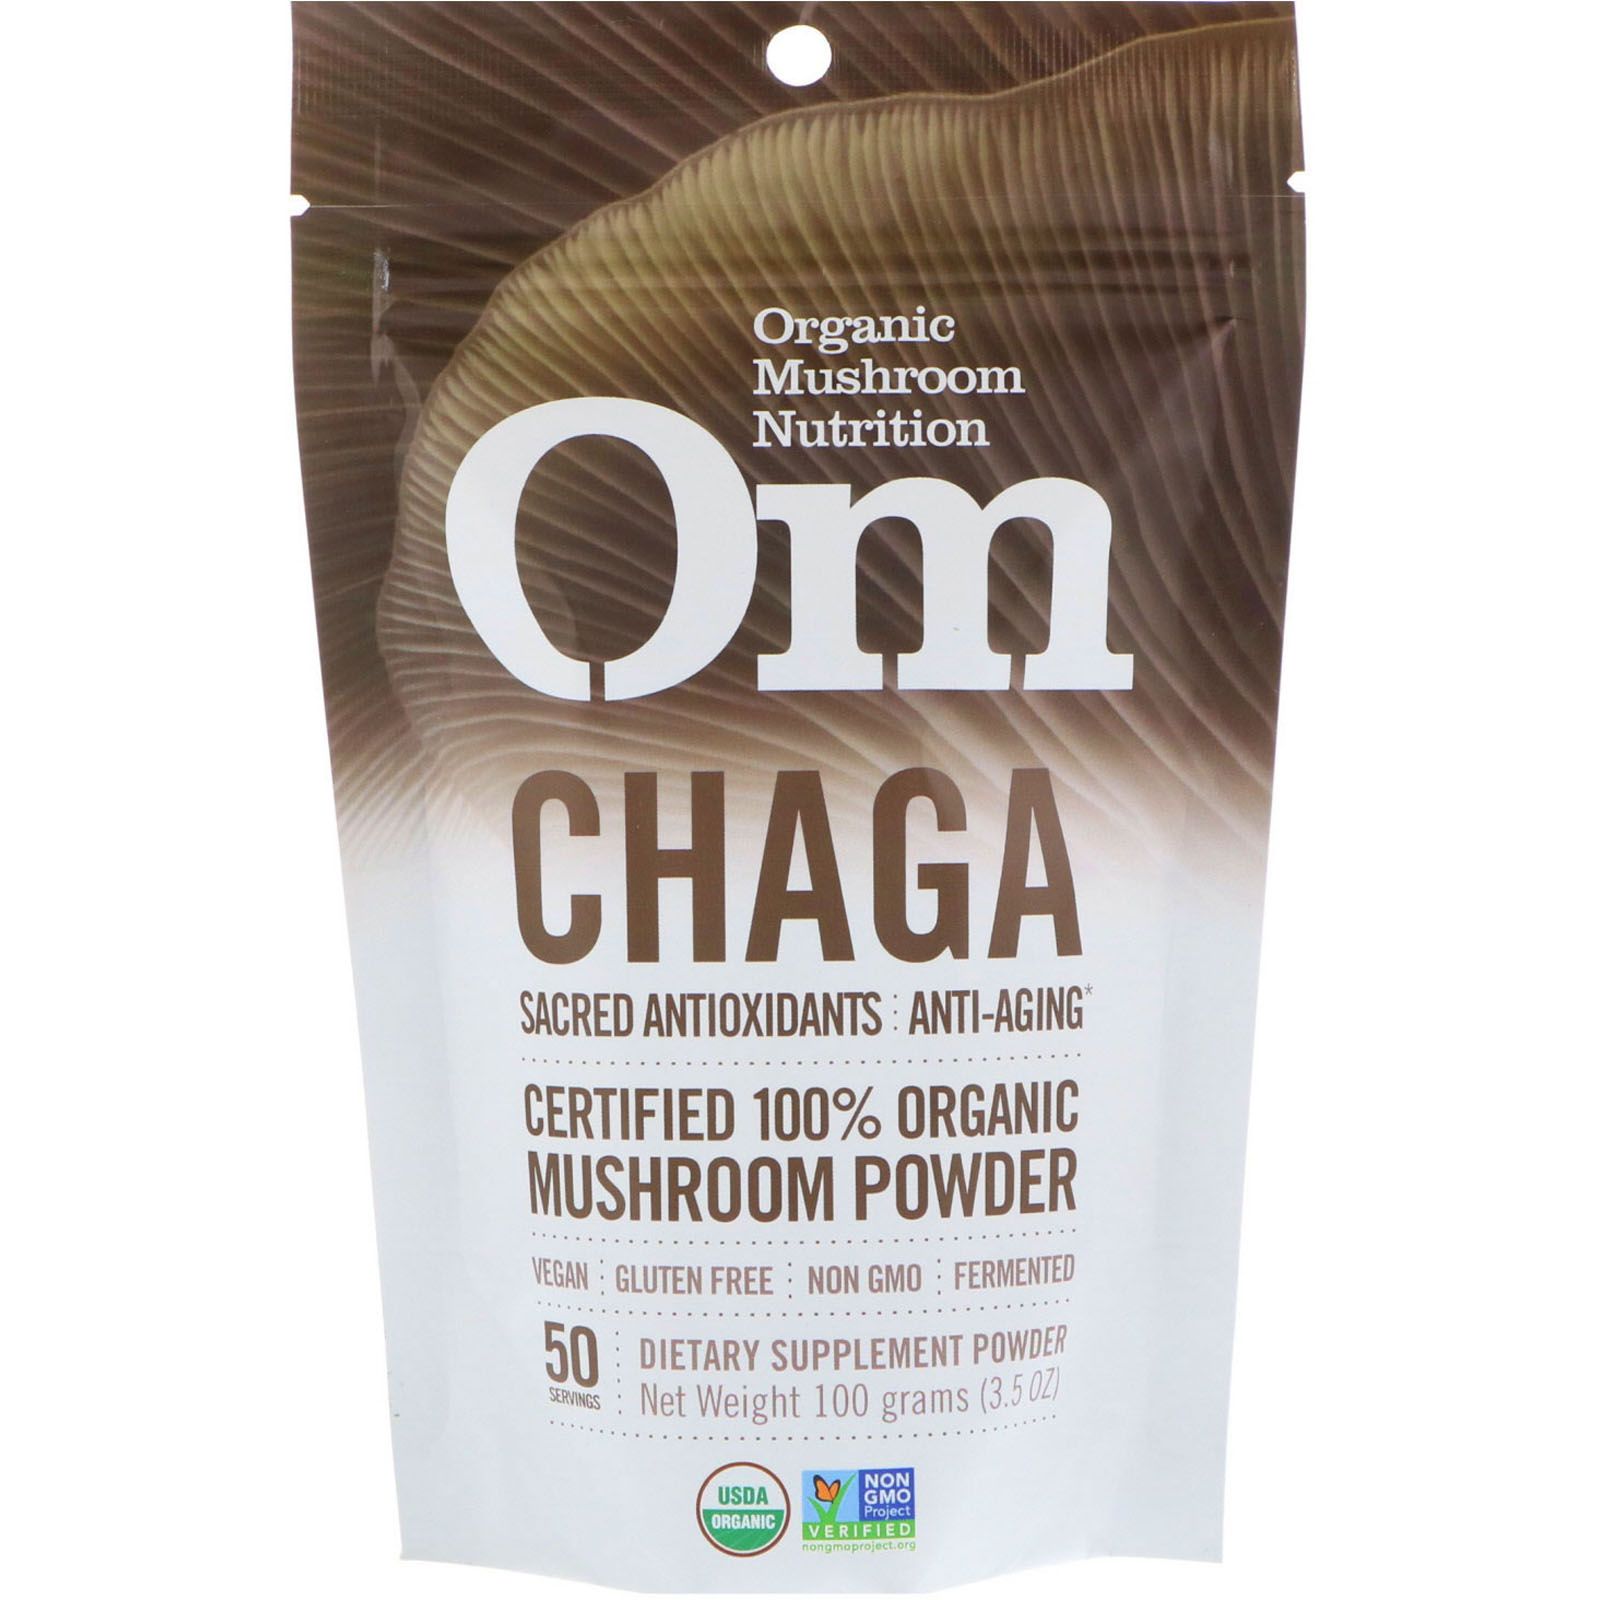 Organic Mushroom Nutrition Chaga Certified 100% Organic Mushroom Powder 3.5 oz (100 g) wright john mushrooms